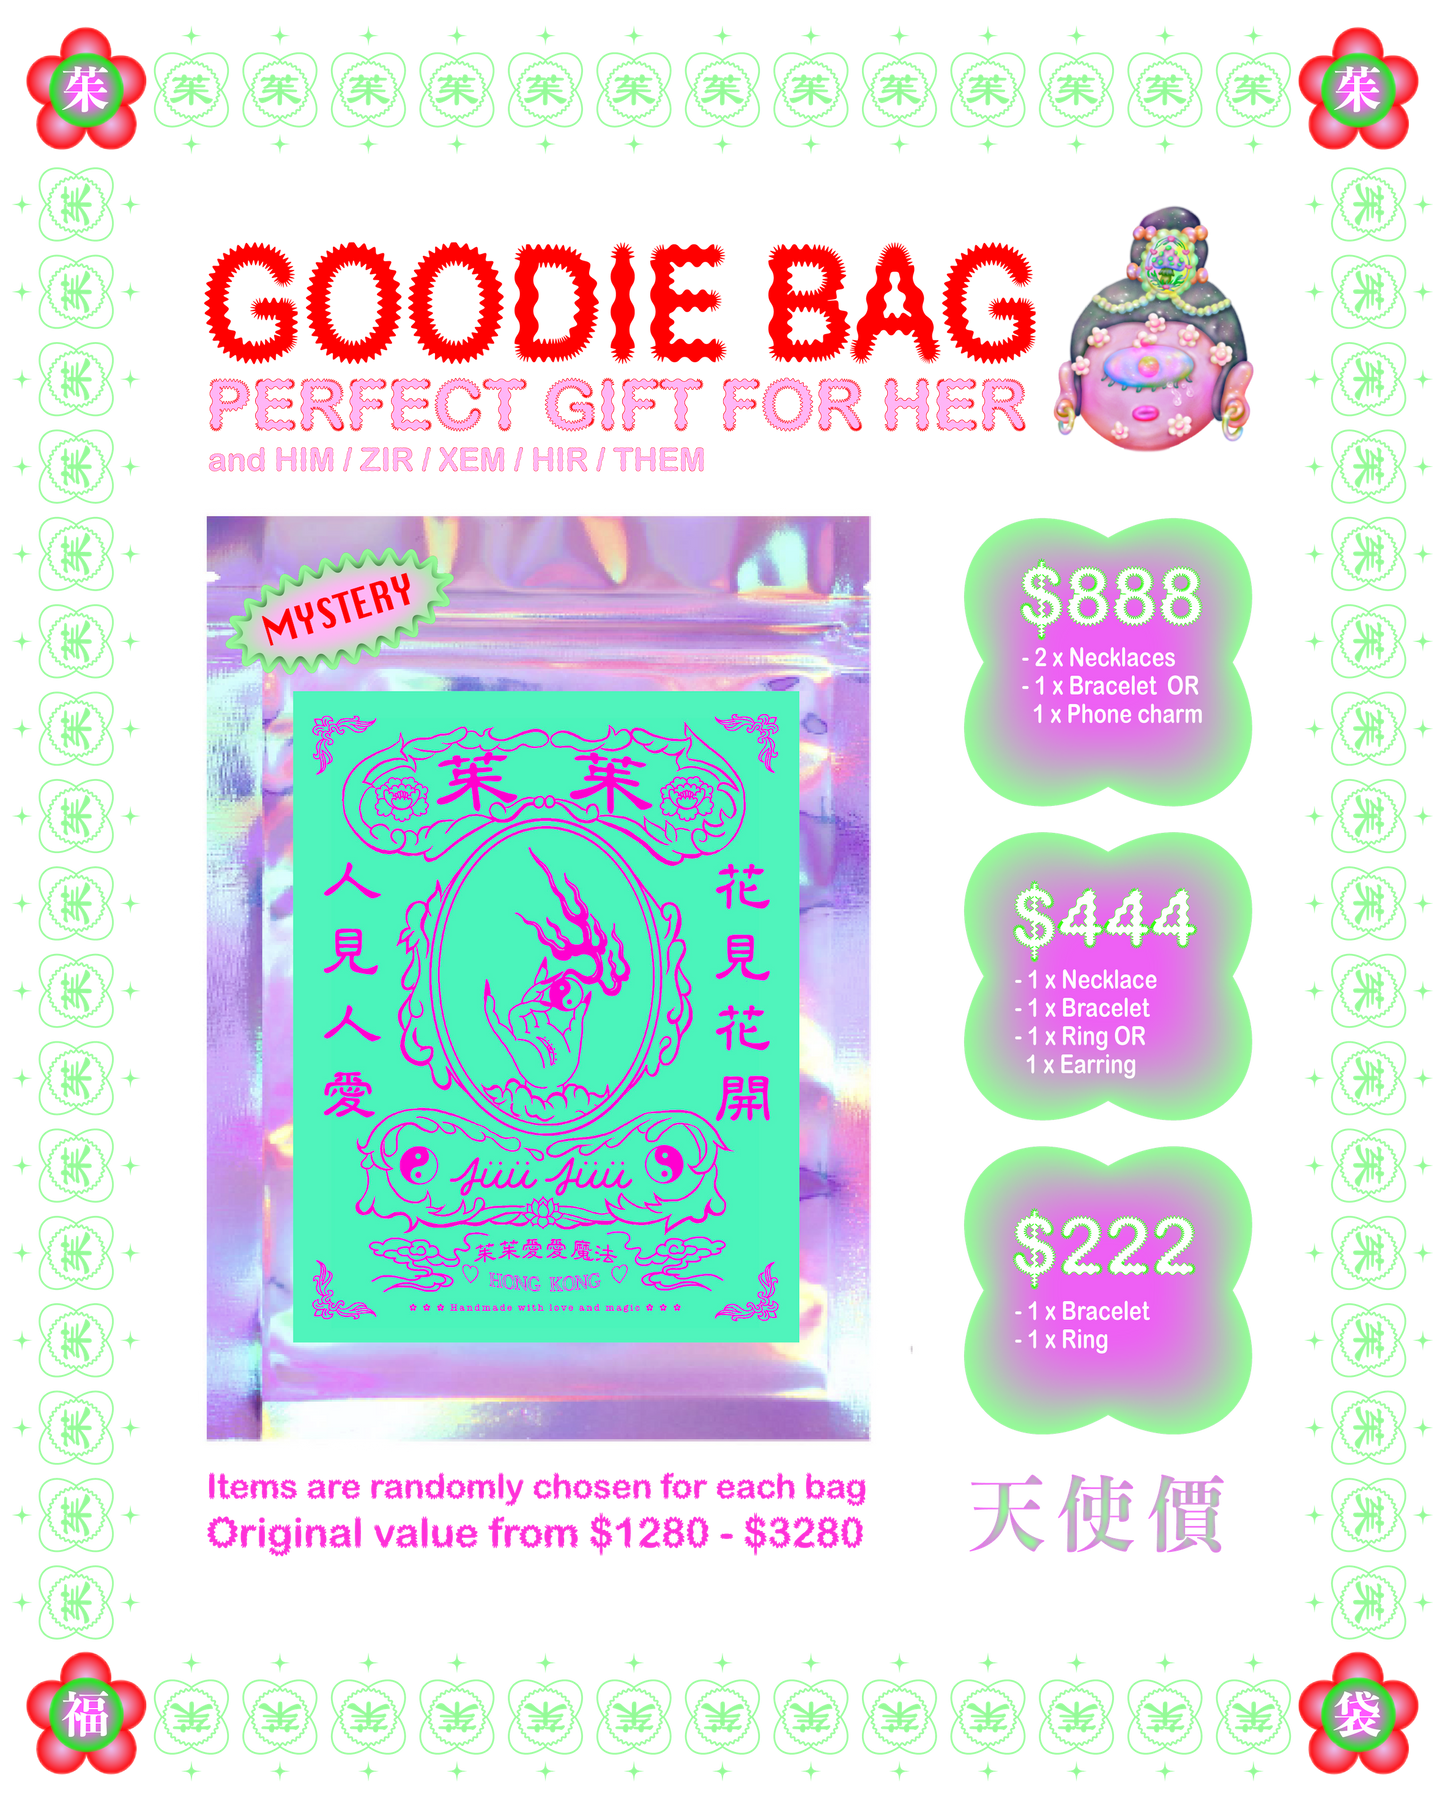 ❓Mystery Goodie Bag